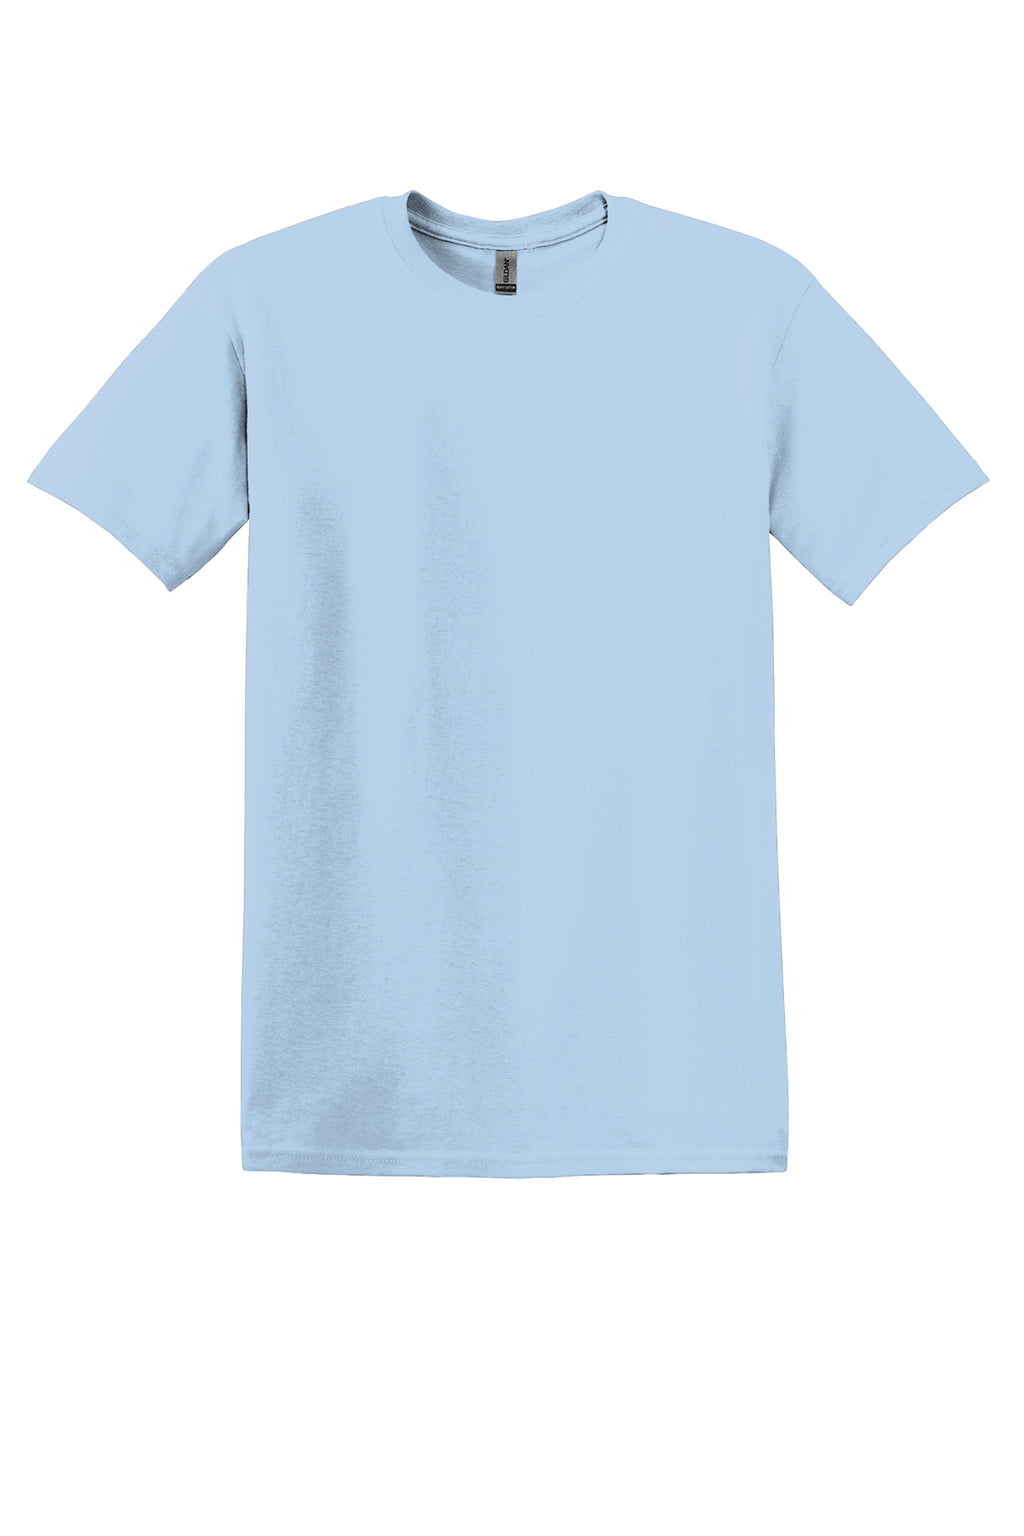 Gildan Mens/Unisex S/S Shirts Light Blue